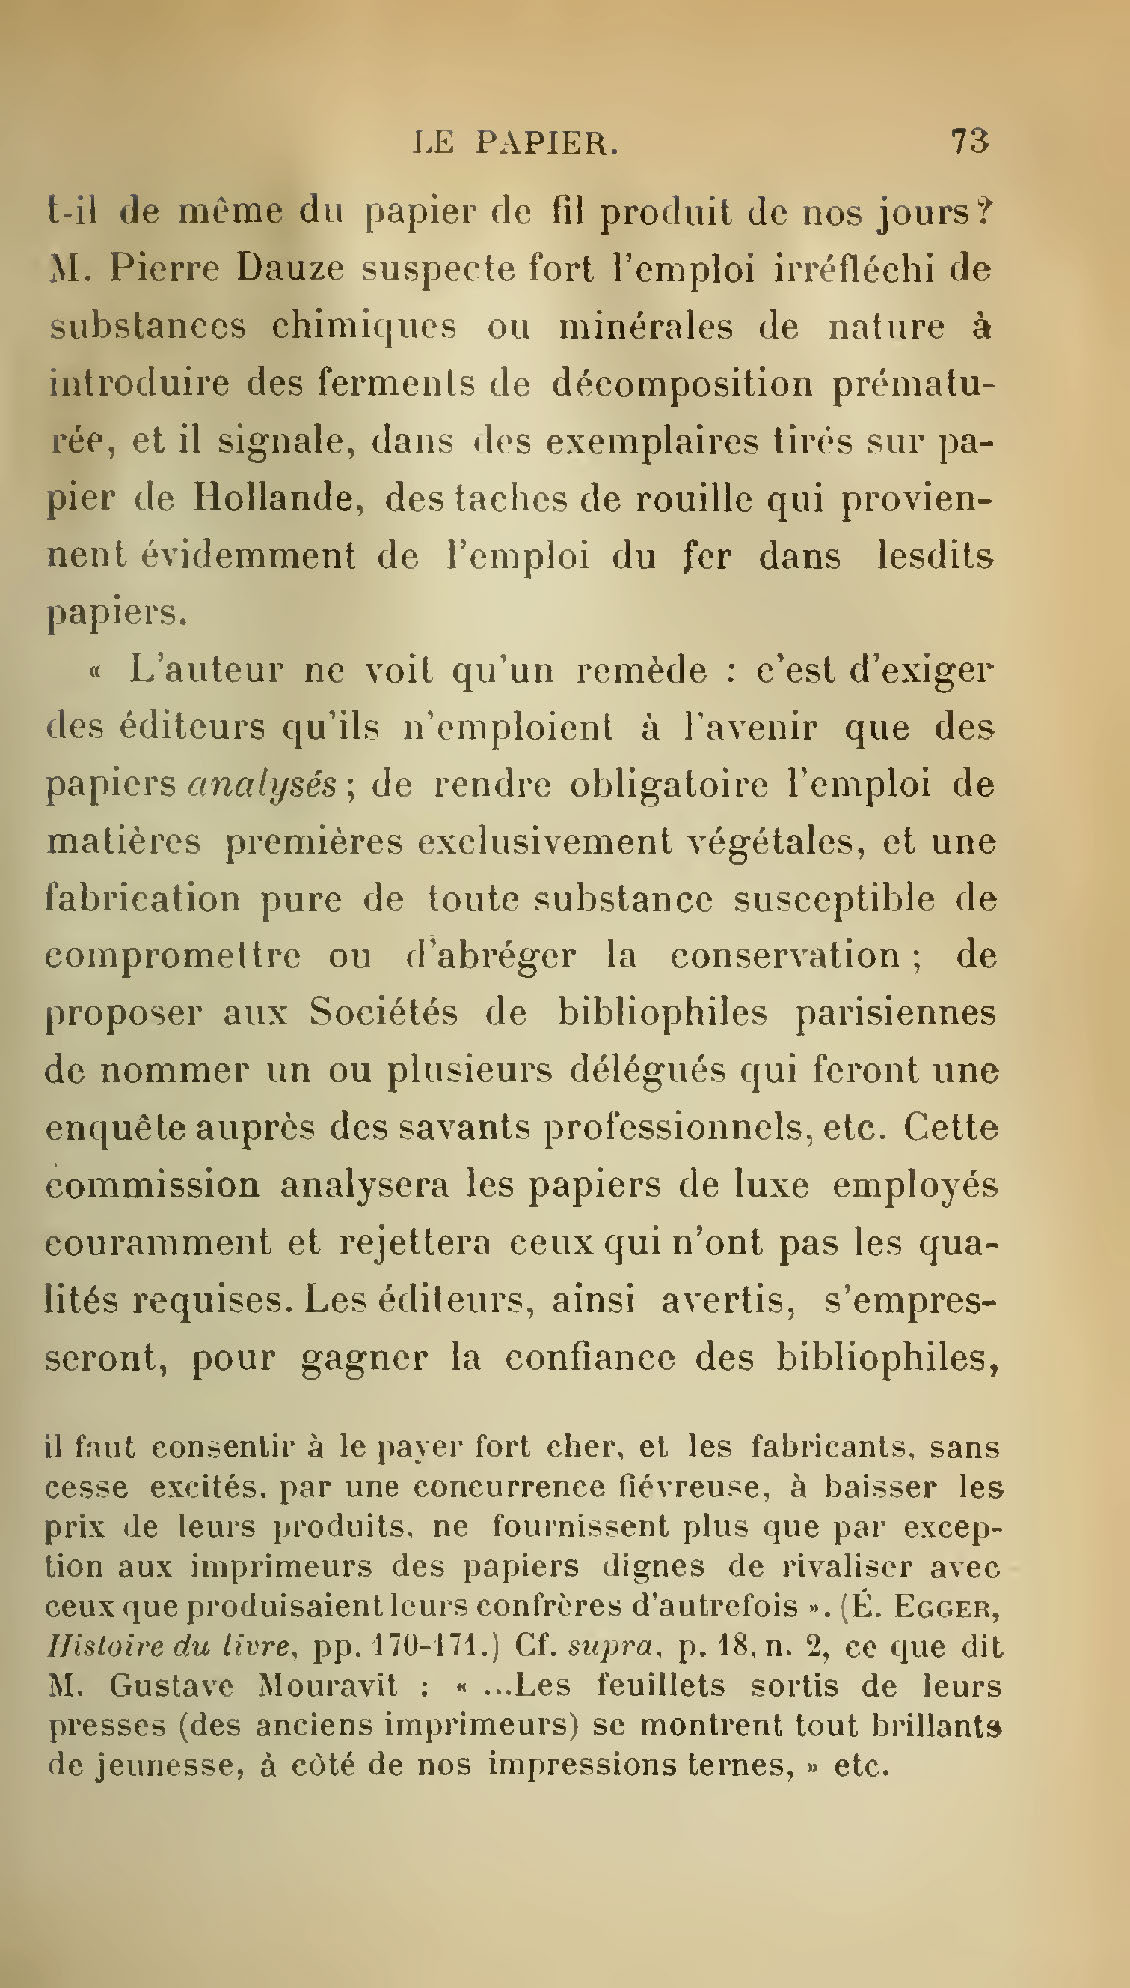 Albert Cim, Le Livre, t. III, p. 73.